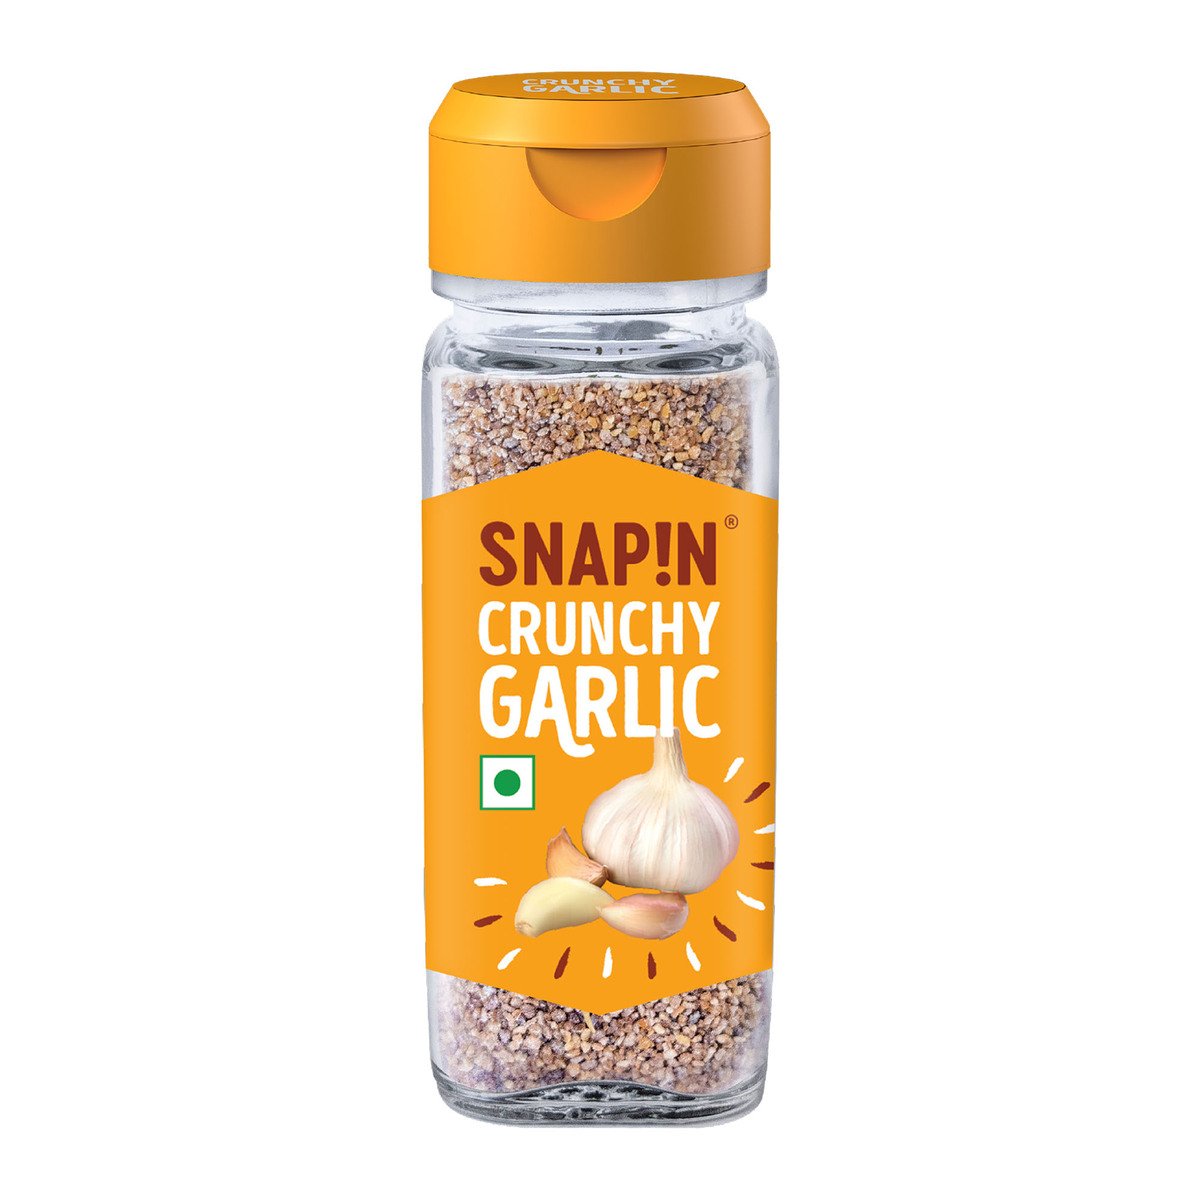 Snapin Crunchy Garlic 45 g